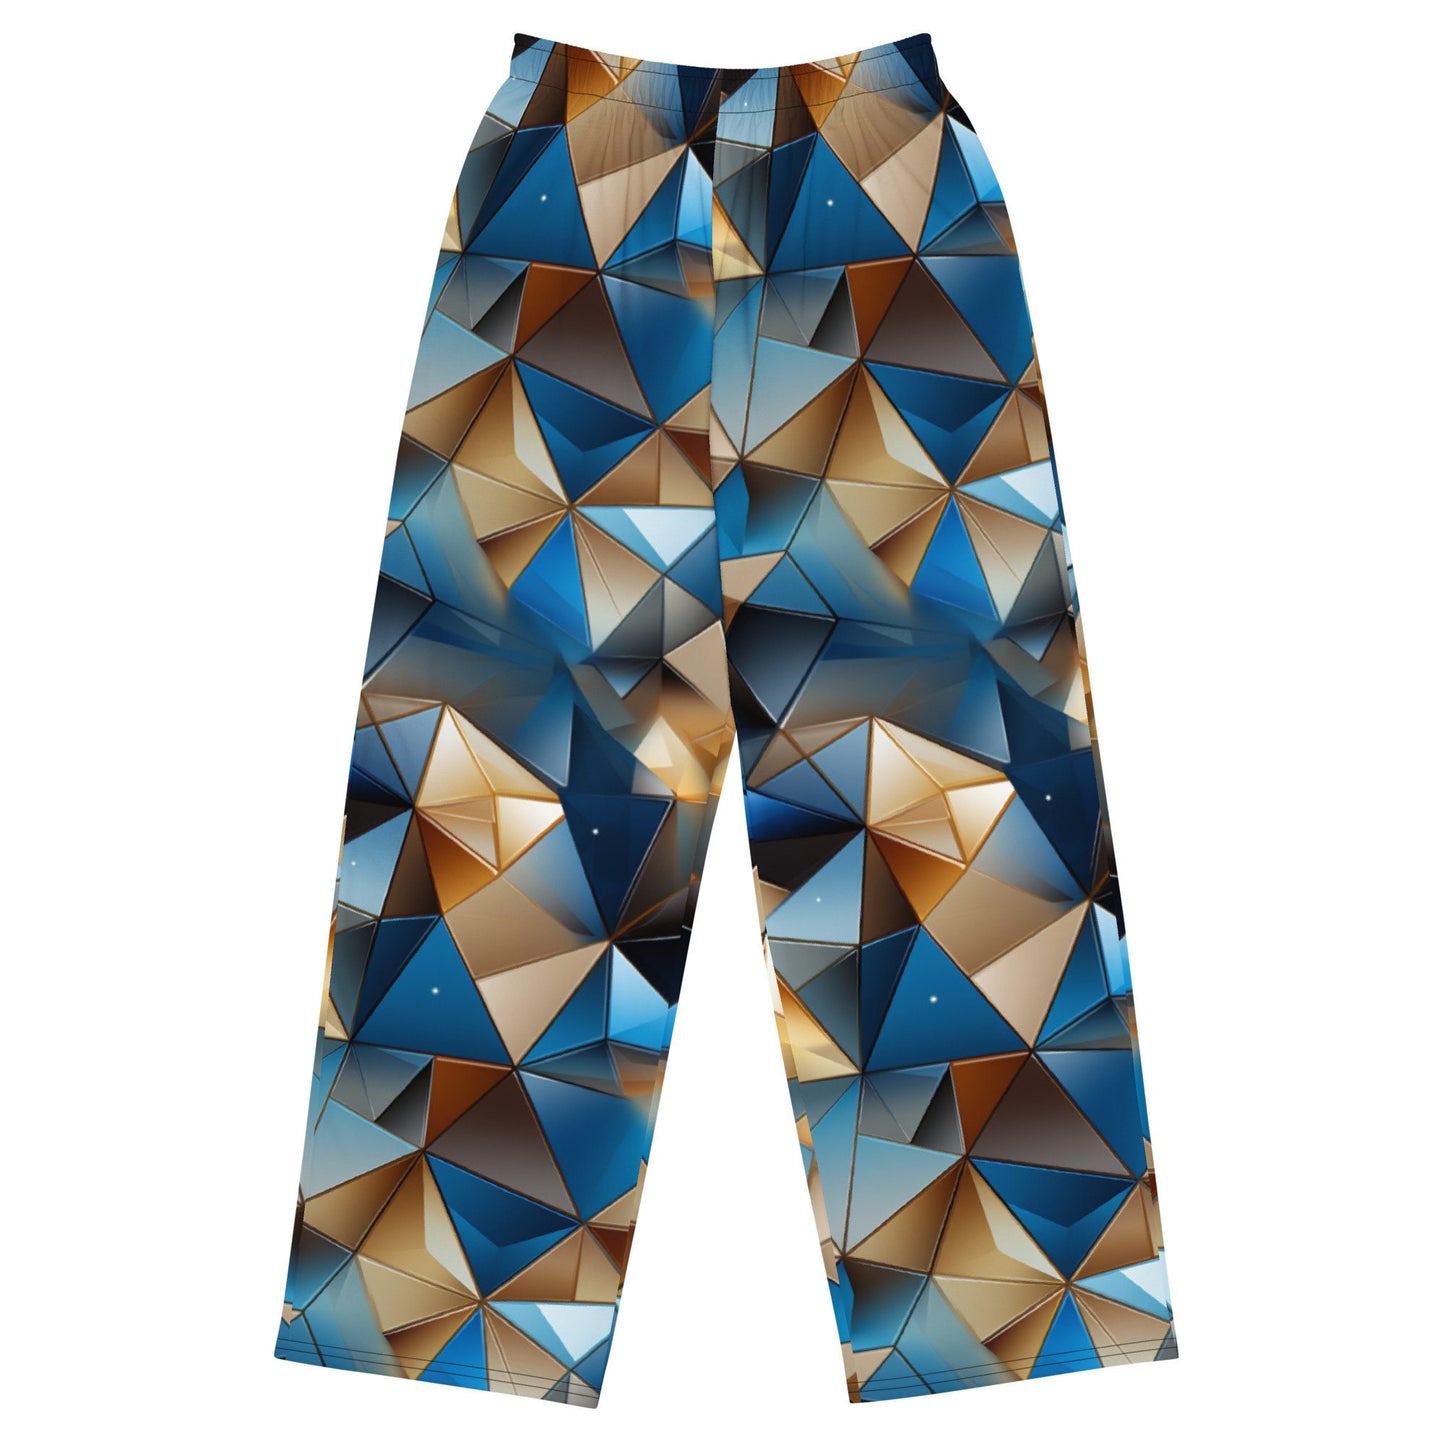 Festive 3D Triangle Design Unisex Pants - Vibrant Gold and Blue - Wide-Leg